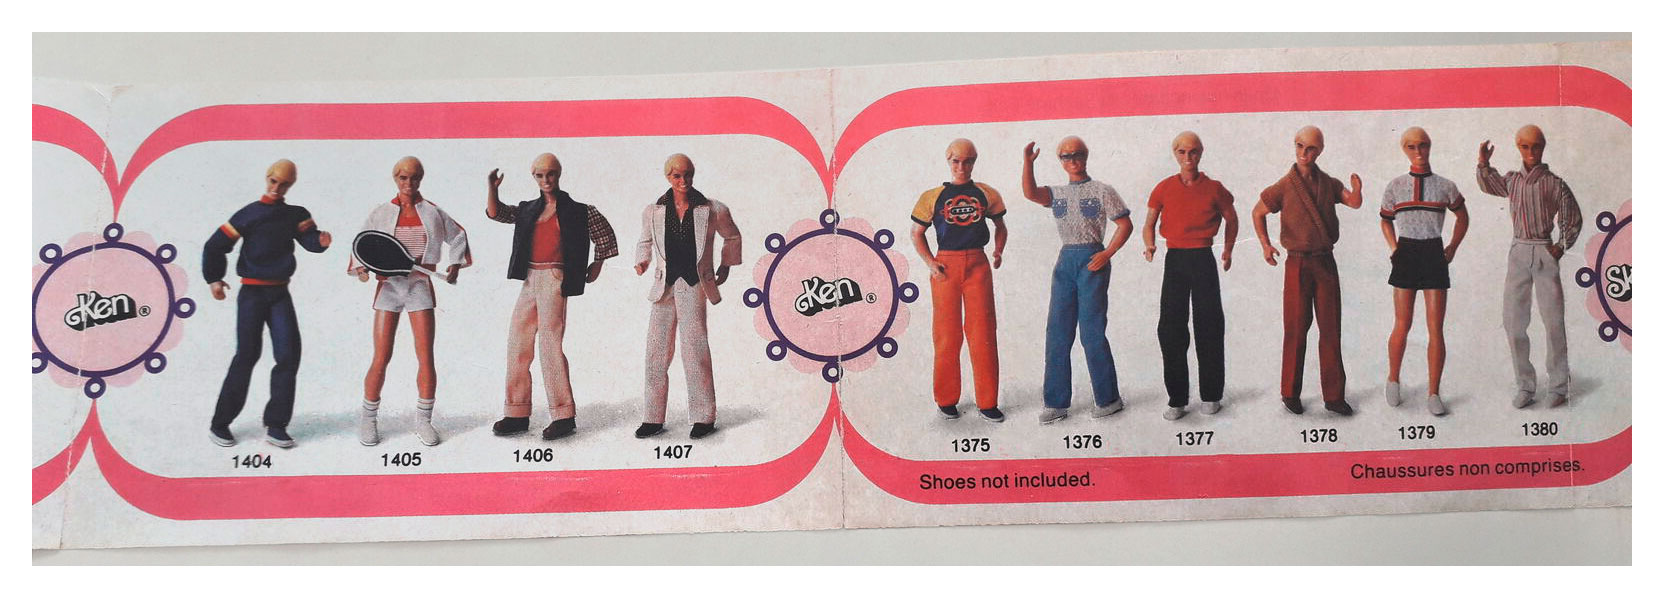 1980 Canadian Barbie booklet